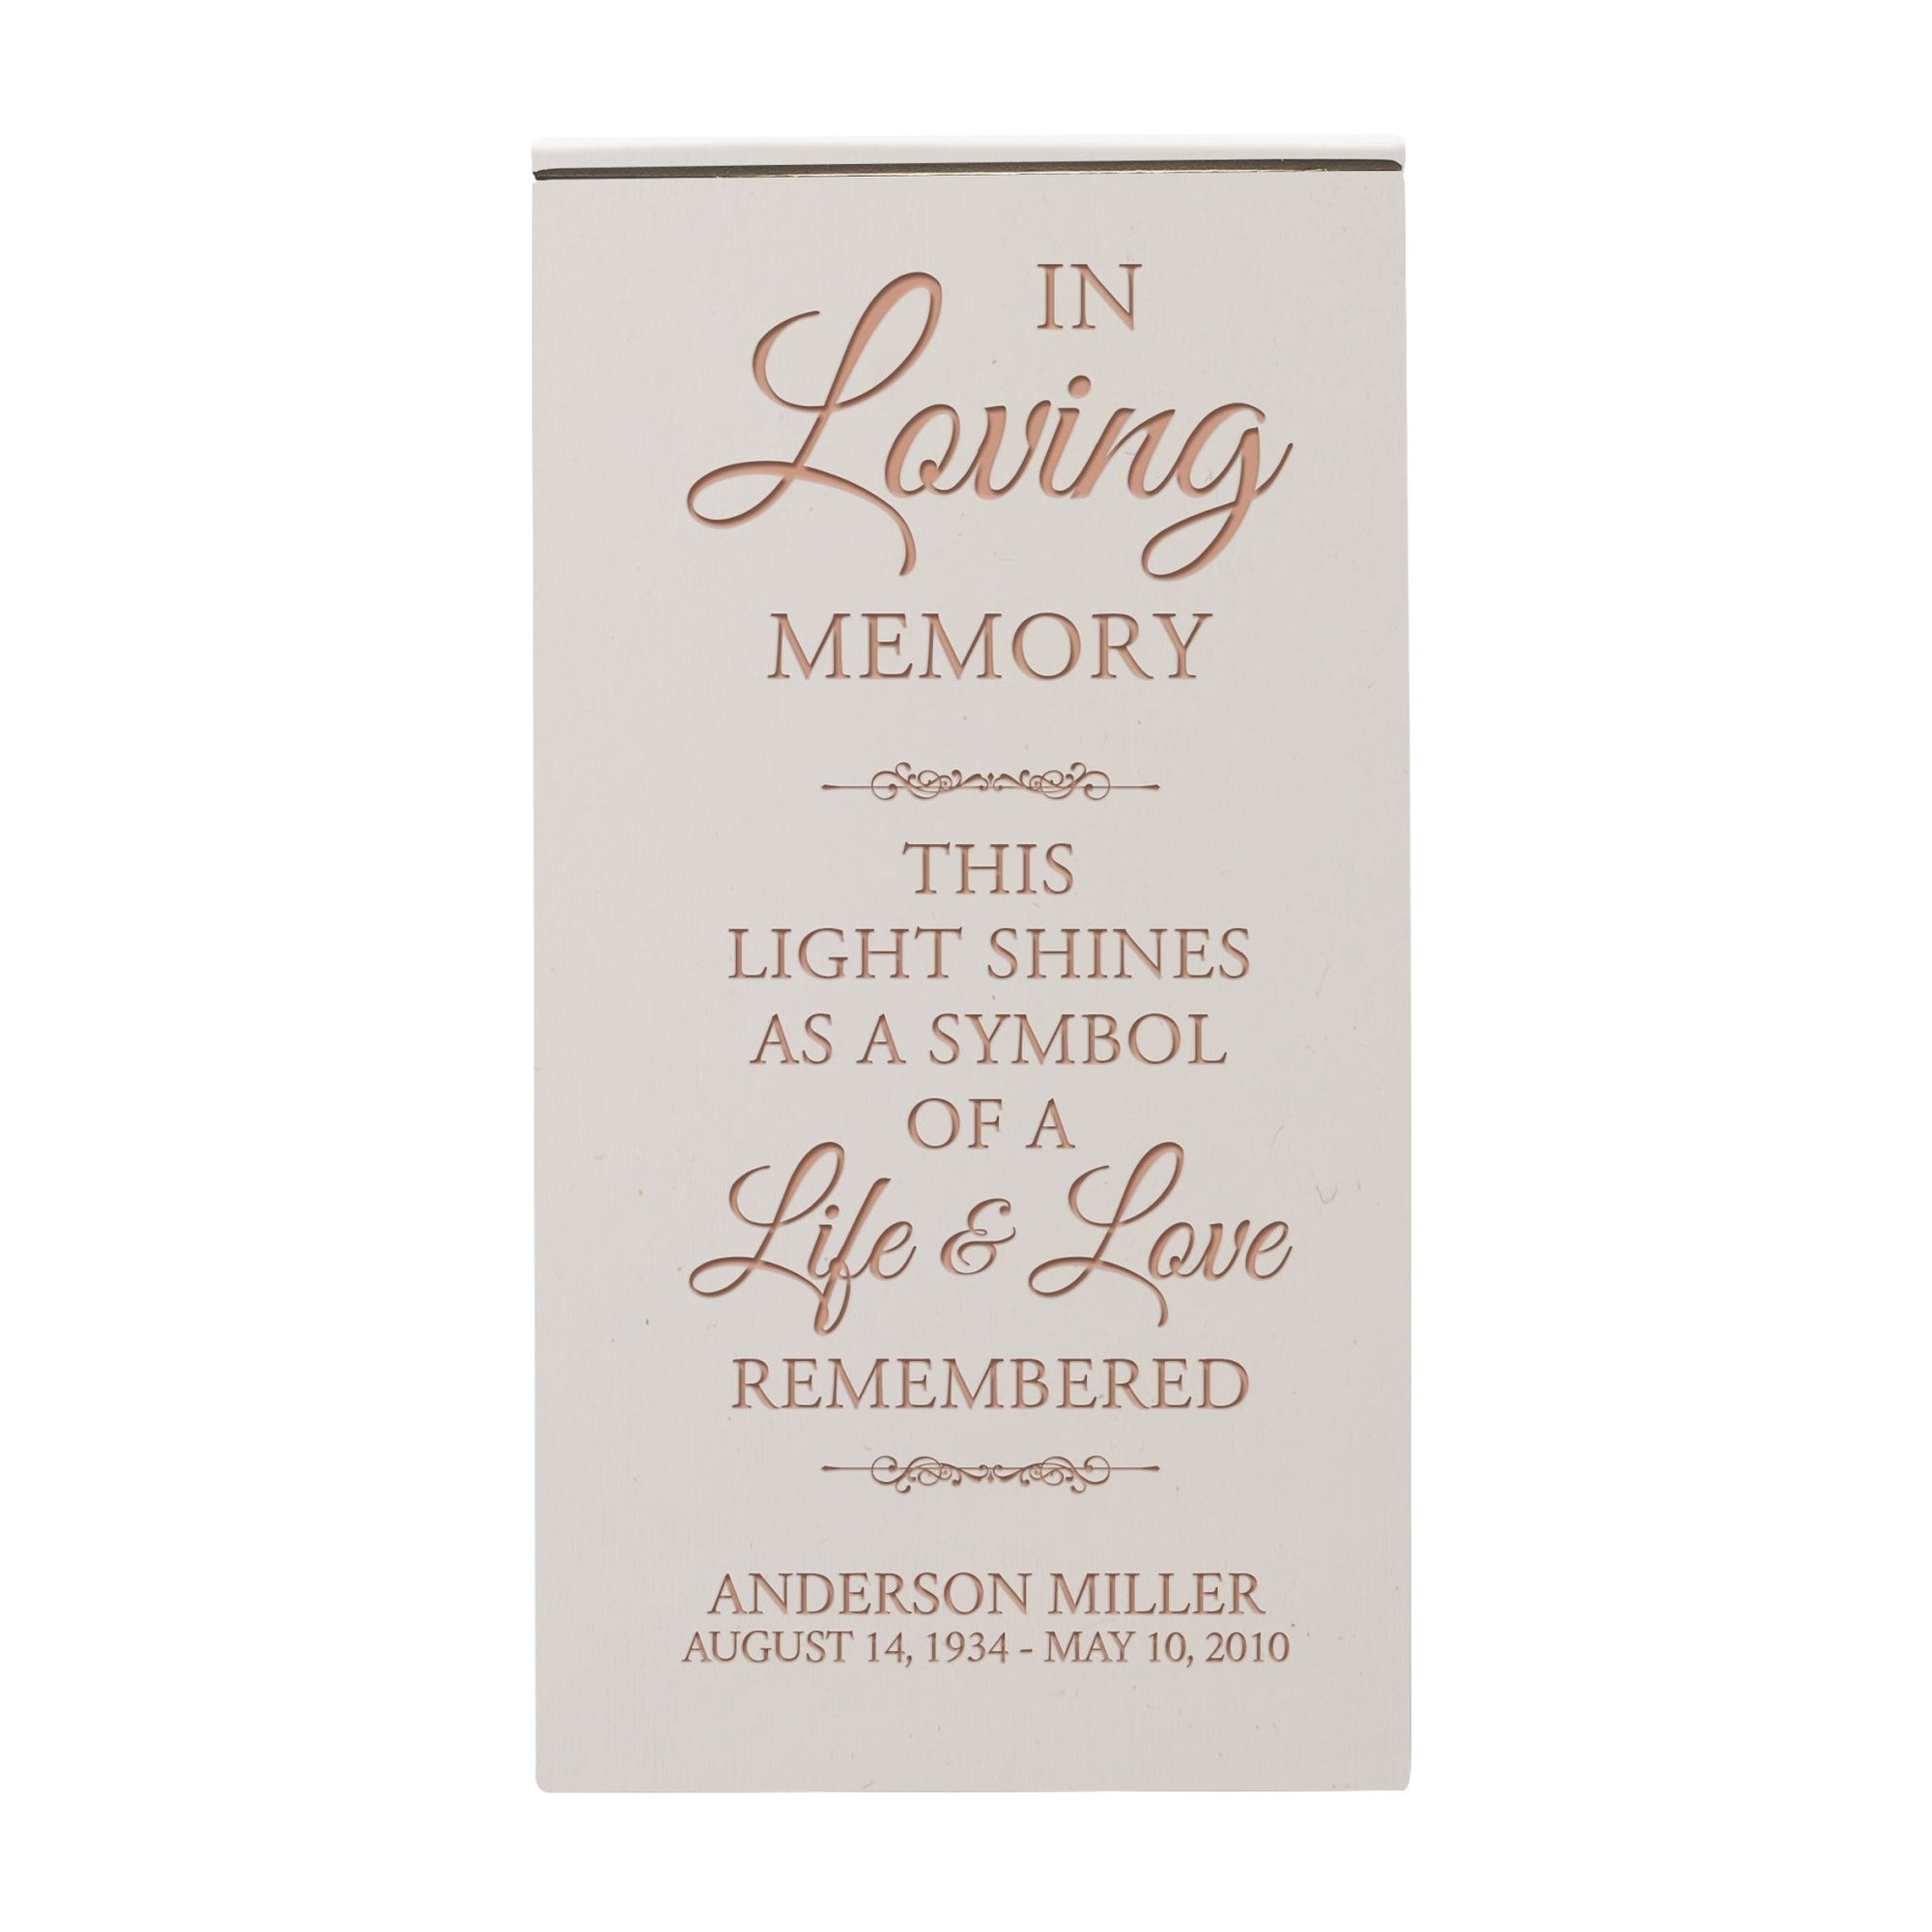 Custom Engraved Memorial Keepsake Urn Box holds 100 cu in of Ashes In Loving Memory - This Light Shines - LifeSong Milestones